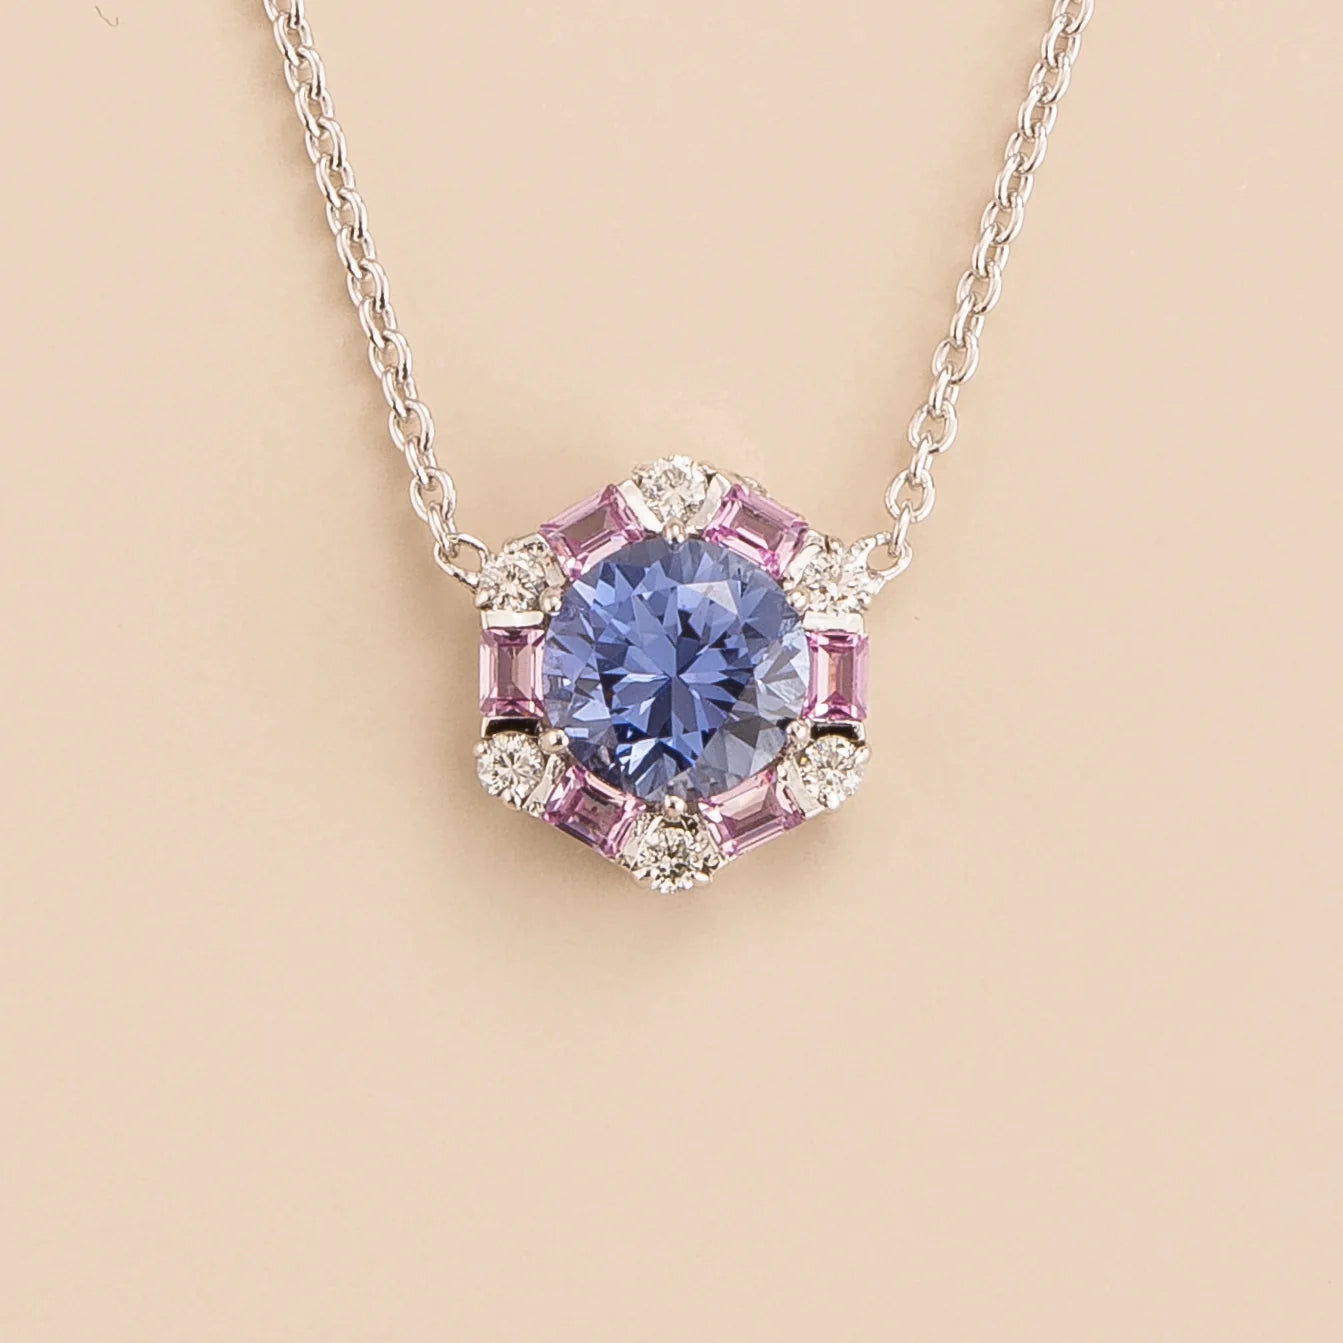 Melba hexagon necklace in 18K white gold vermeil set with lab grown Ceylon blue sapphire, Pink sapphire and Diamond gem stones.